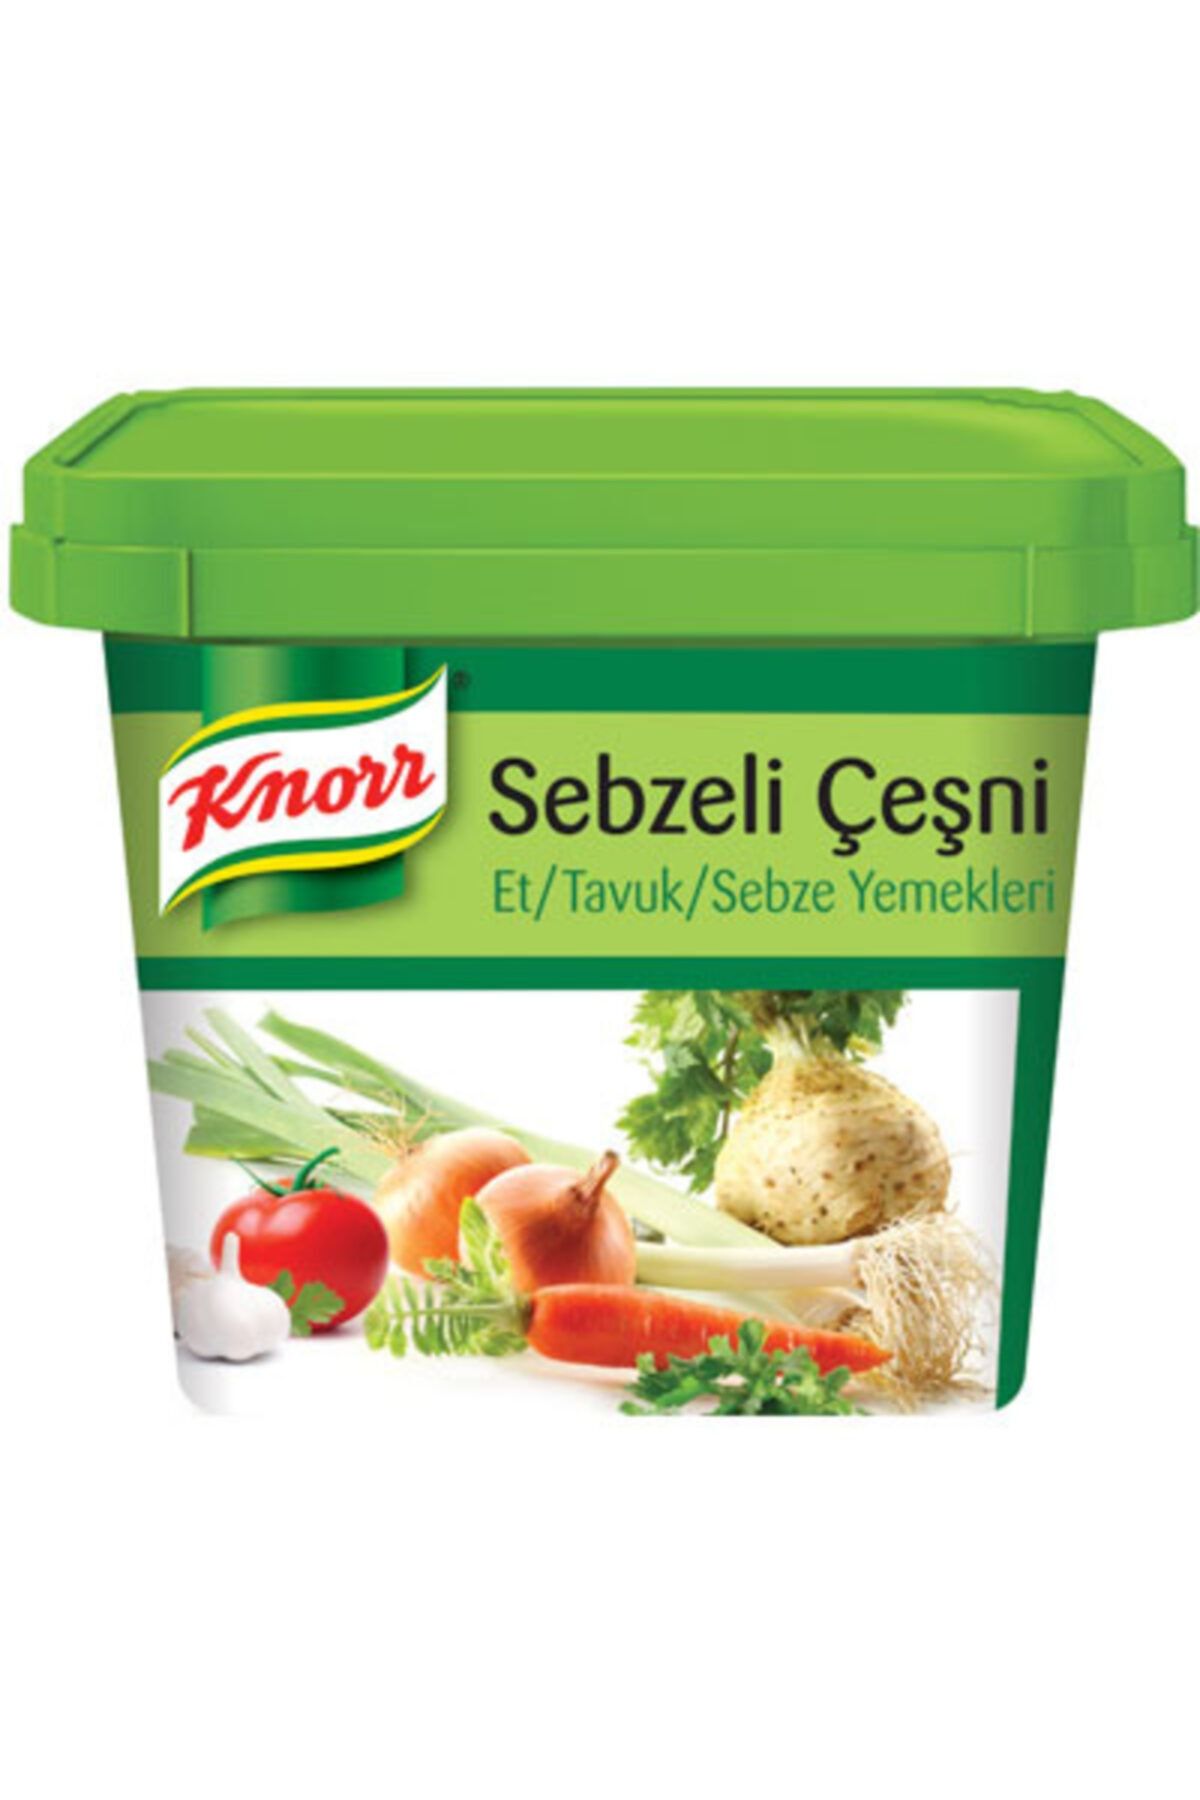 Knorr Sebzeli Çeşni Toz 750 Gr